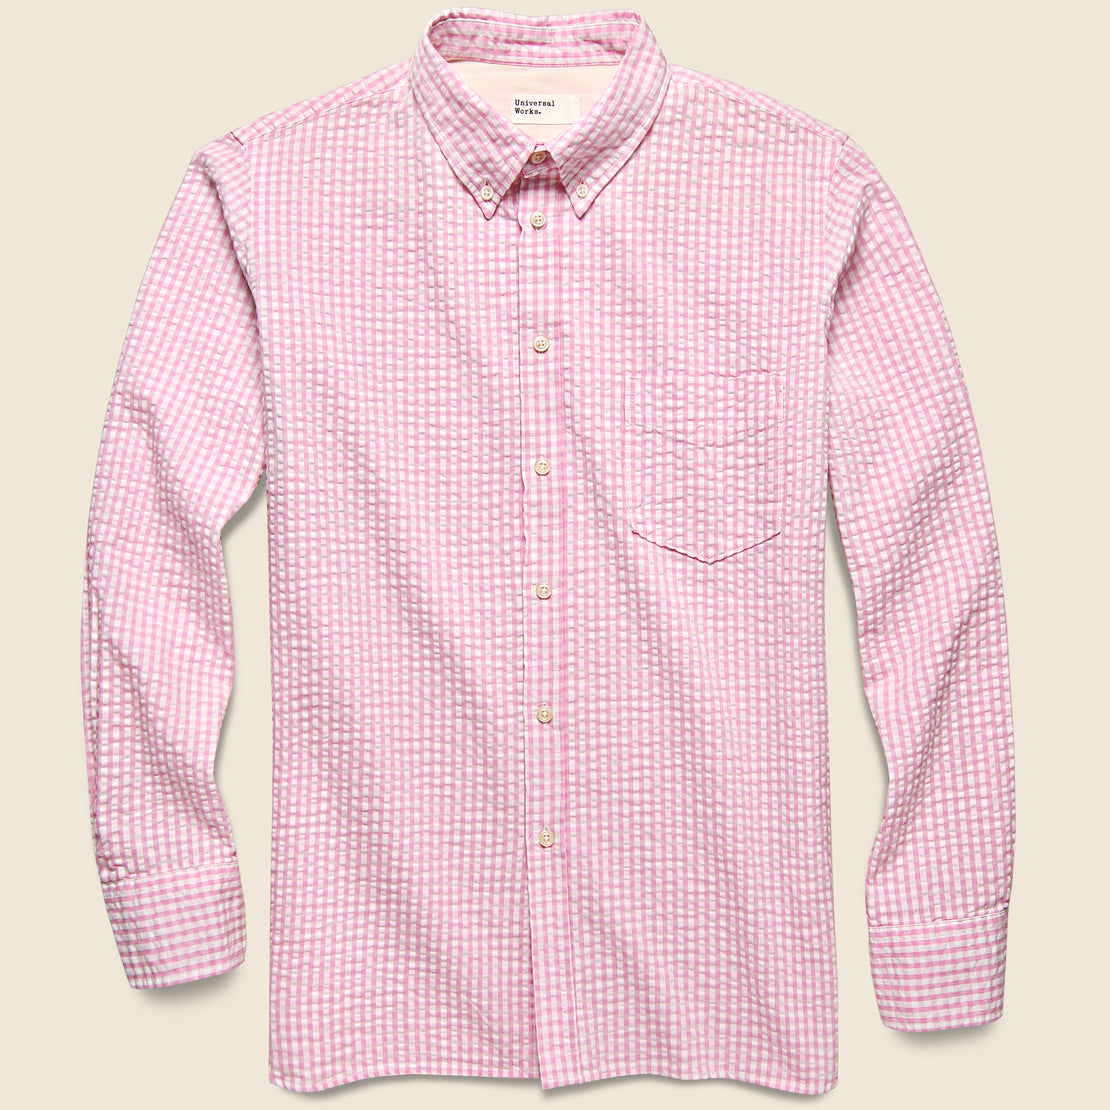 Universal Works Everyday Shirt - Pink Gingham Seersucker